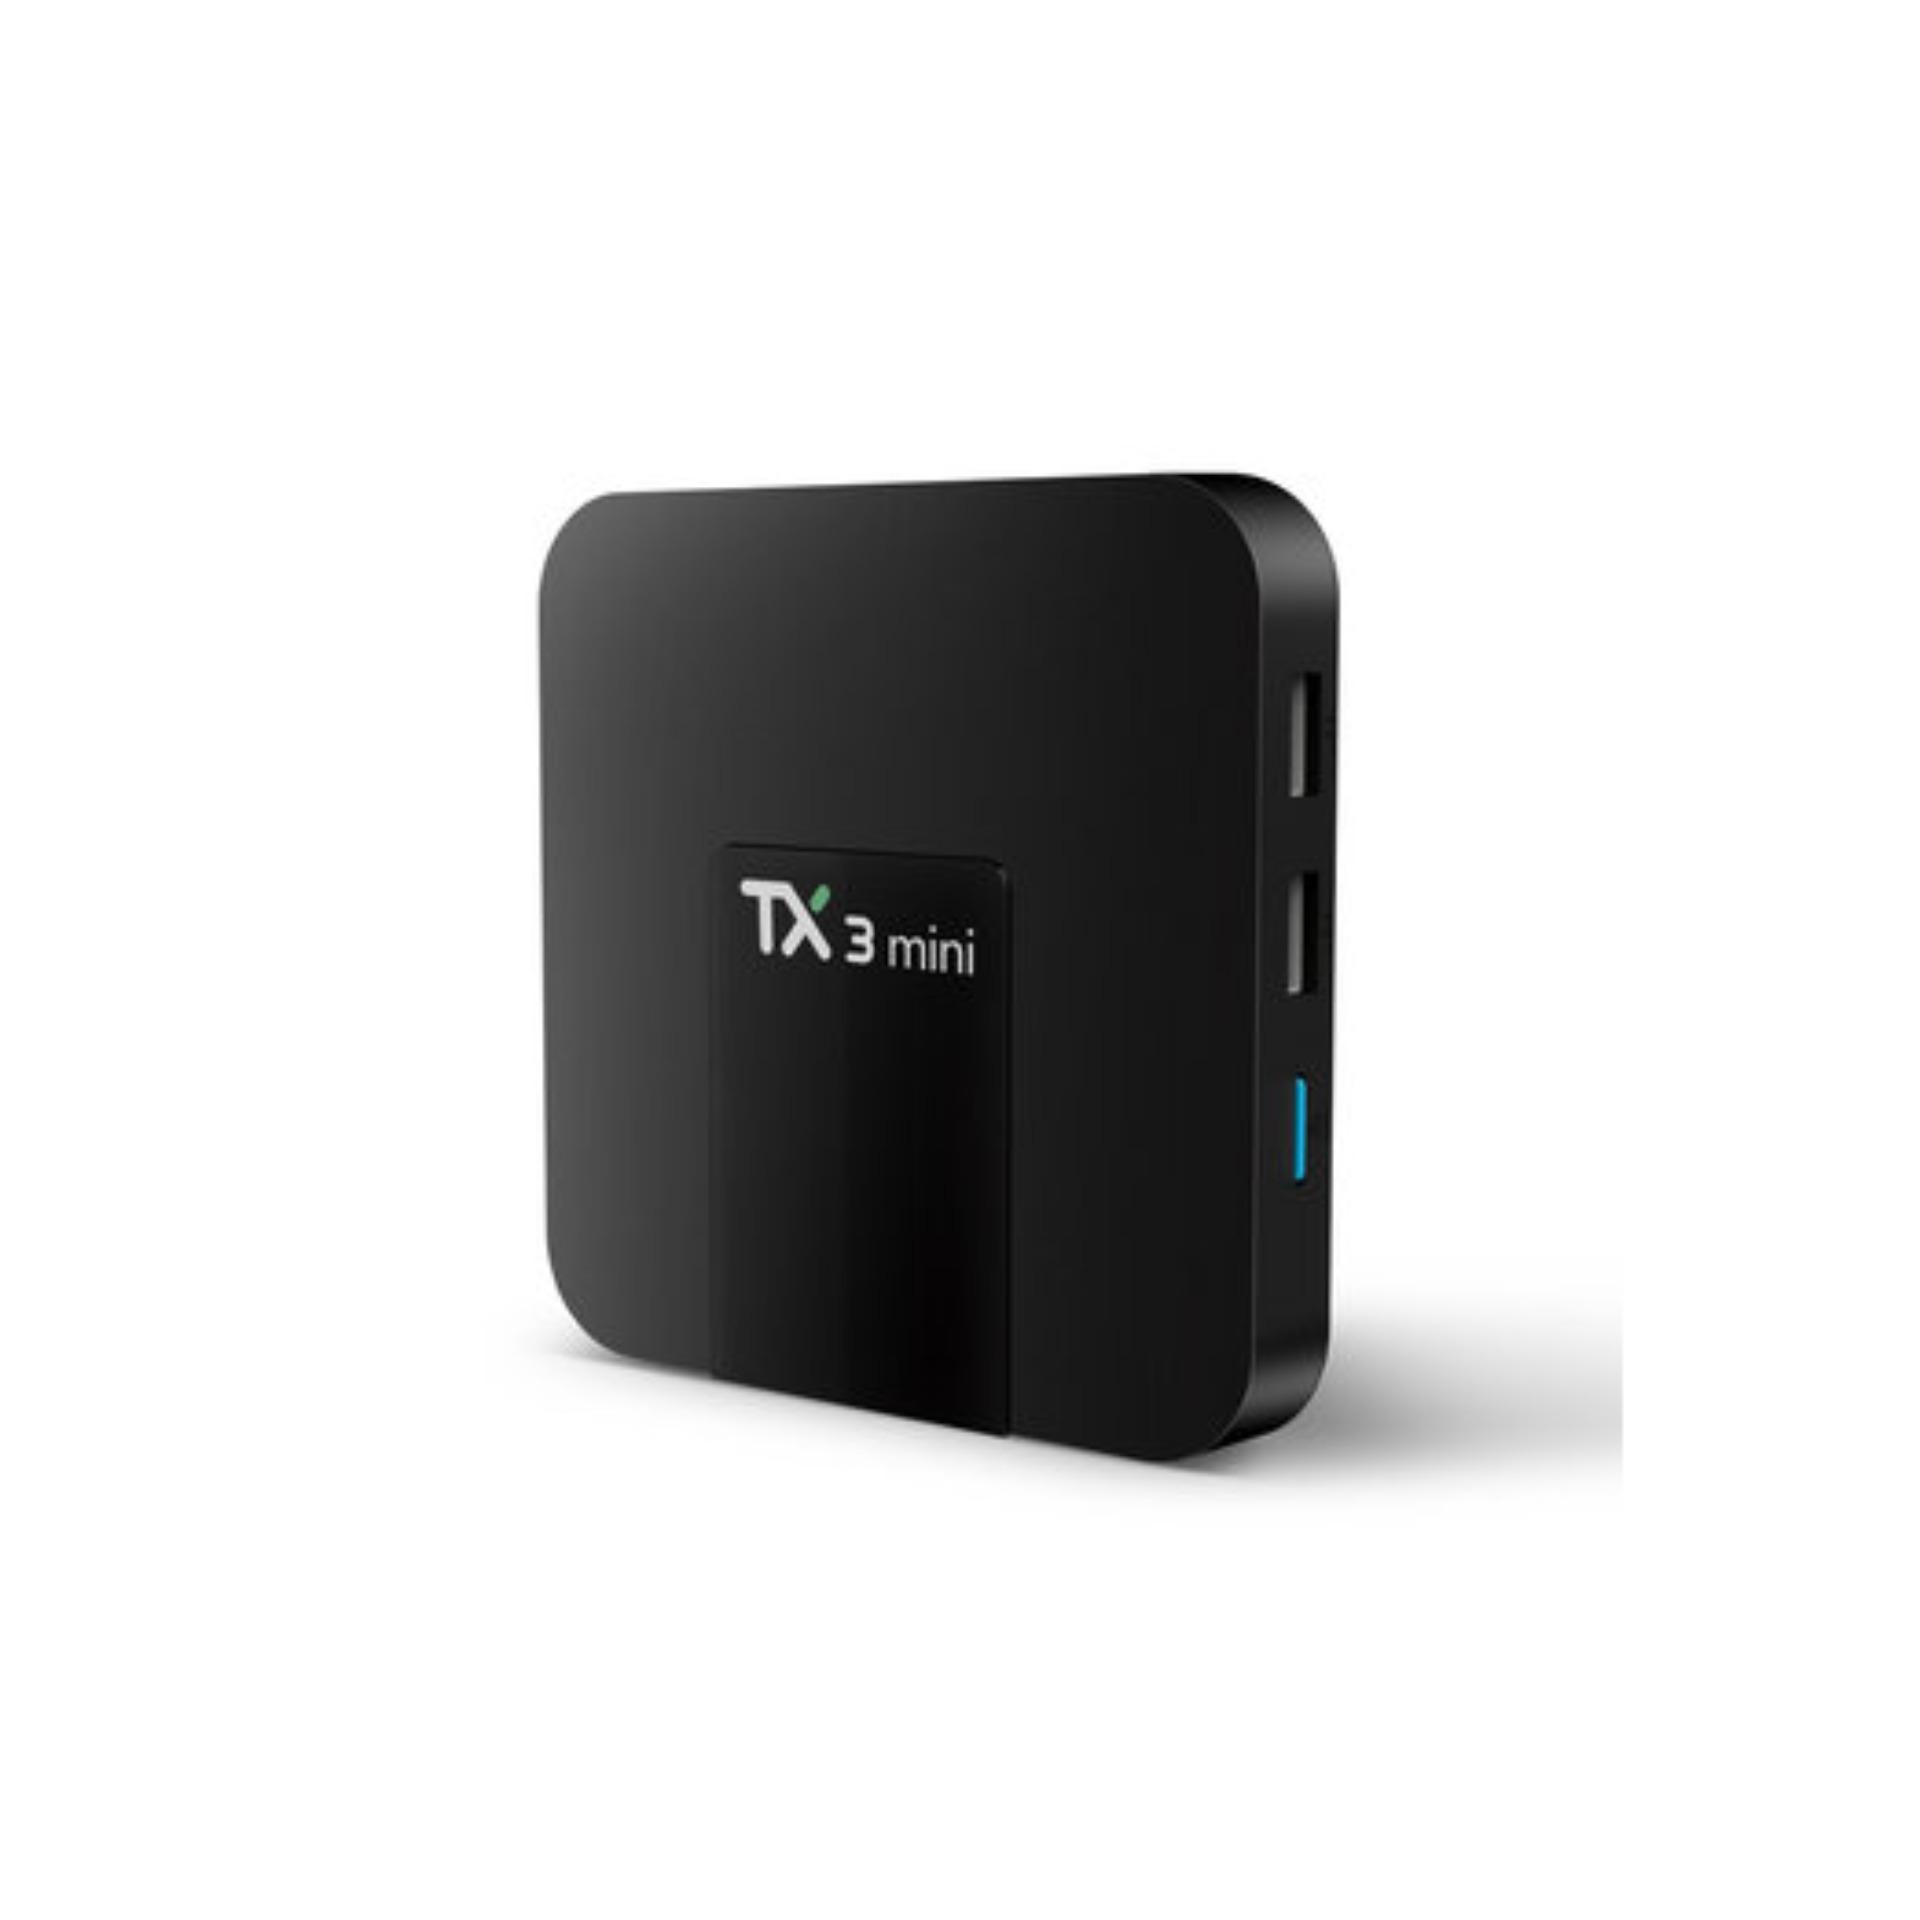 Android TV Box Tanix TX3 Mini Ram2G 4k 3D - New Version 2023 có Bluetooth